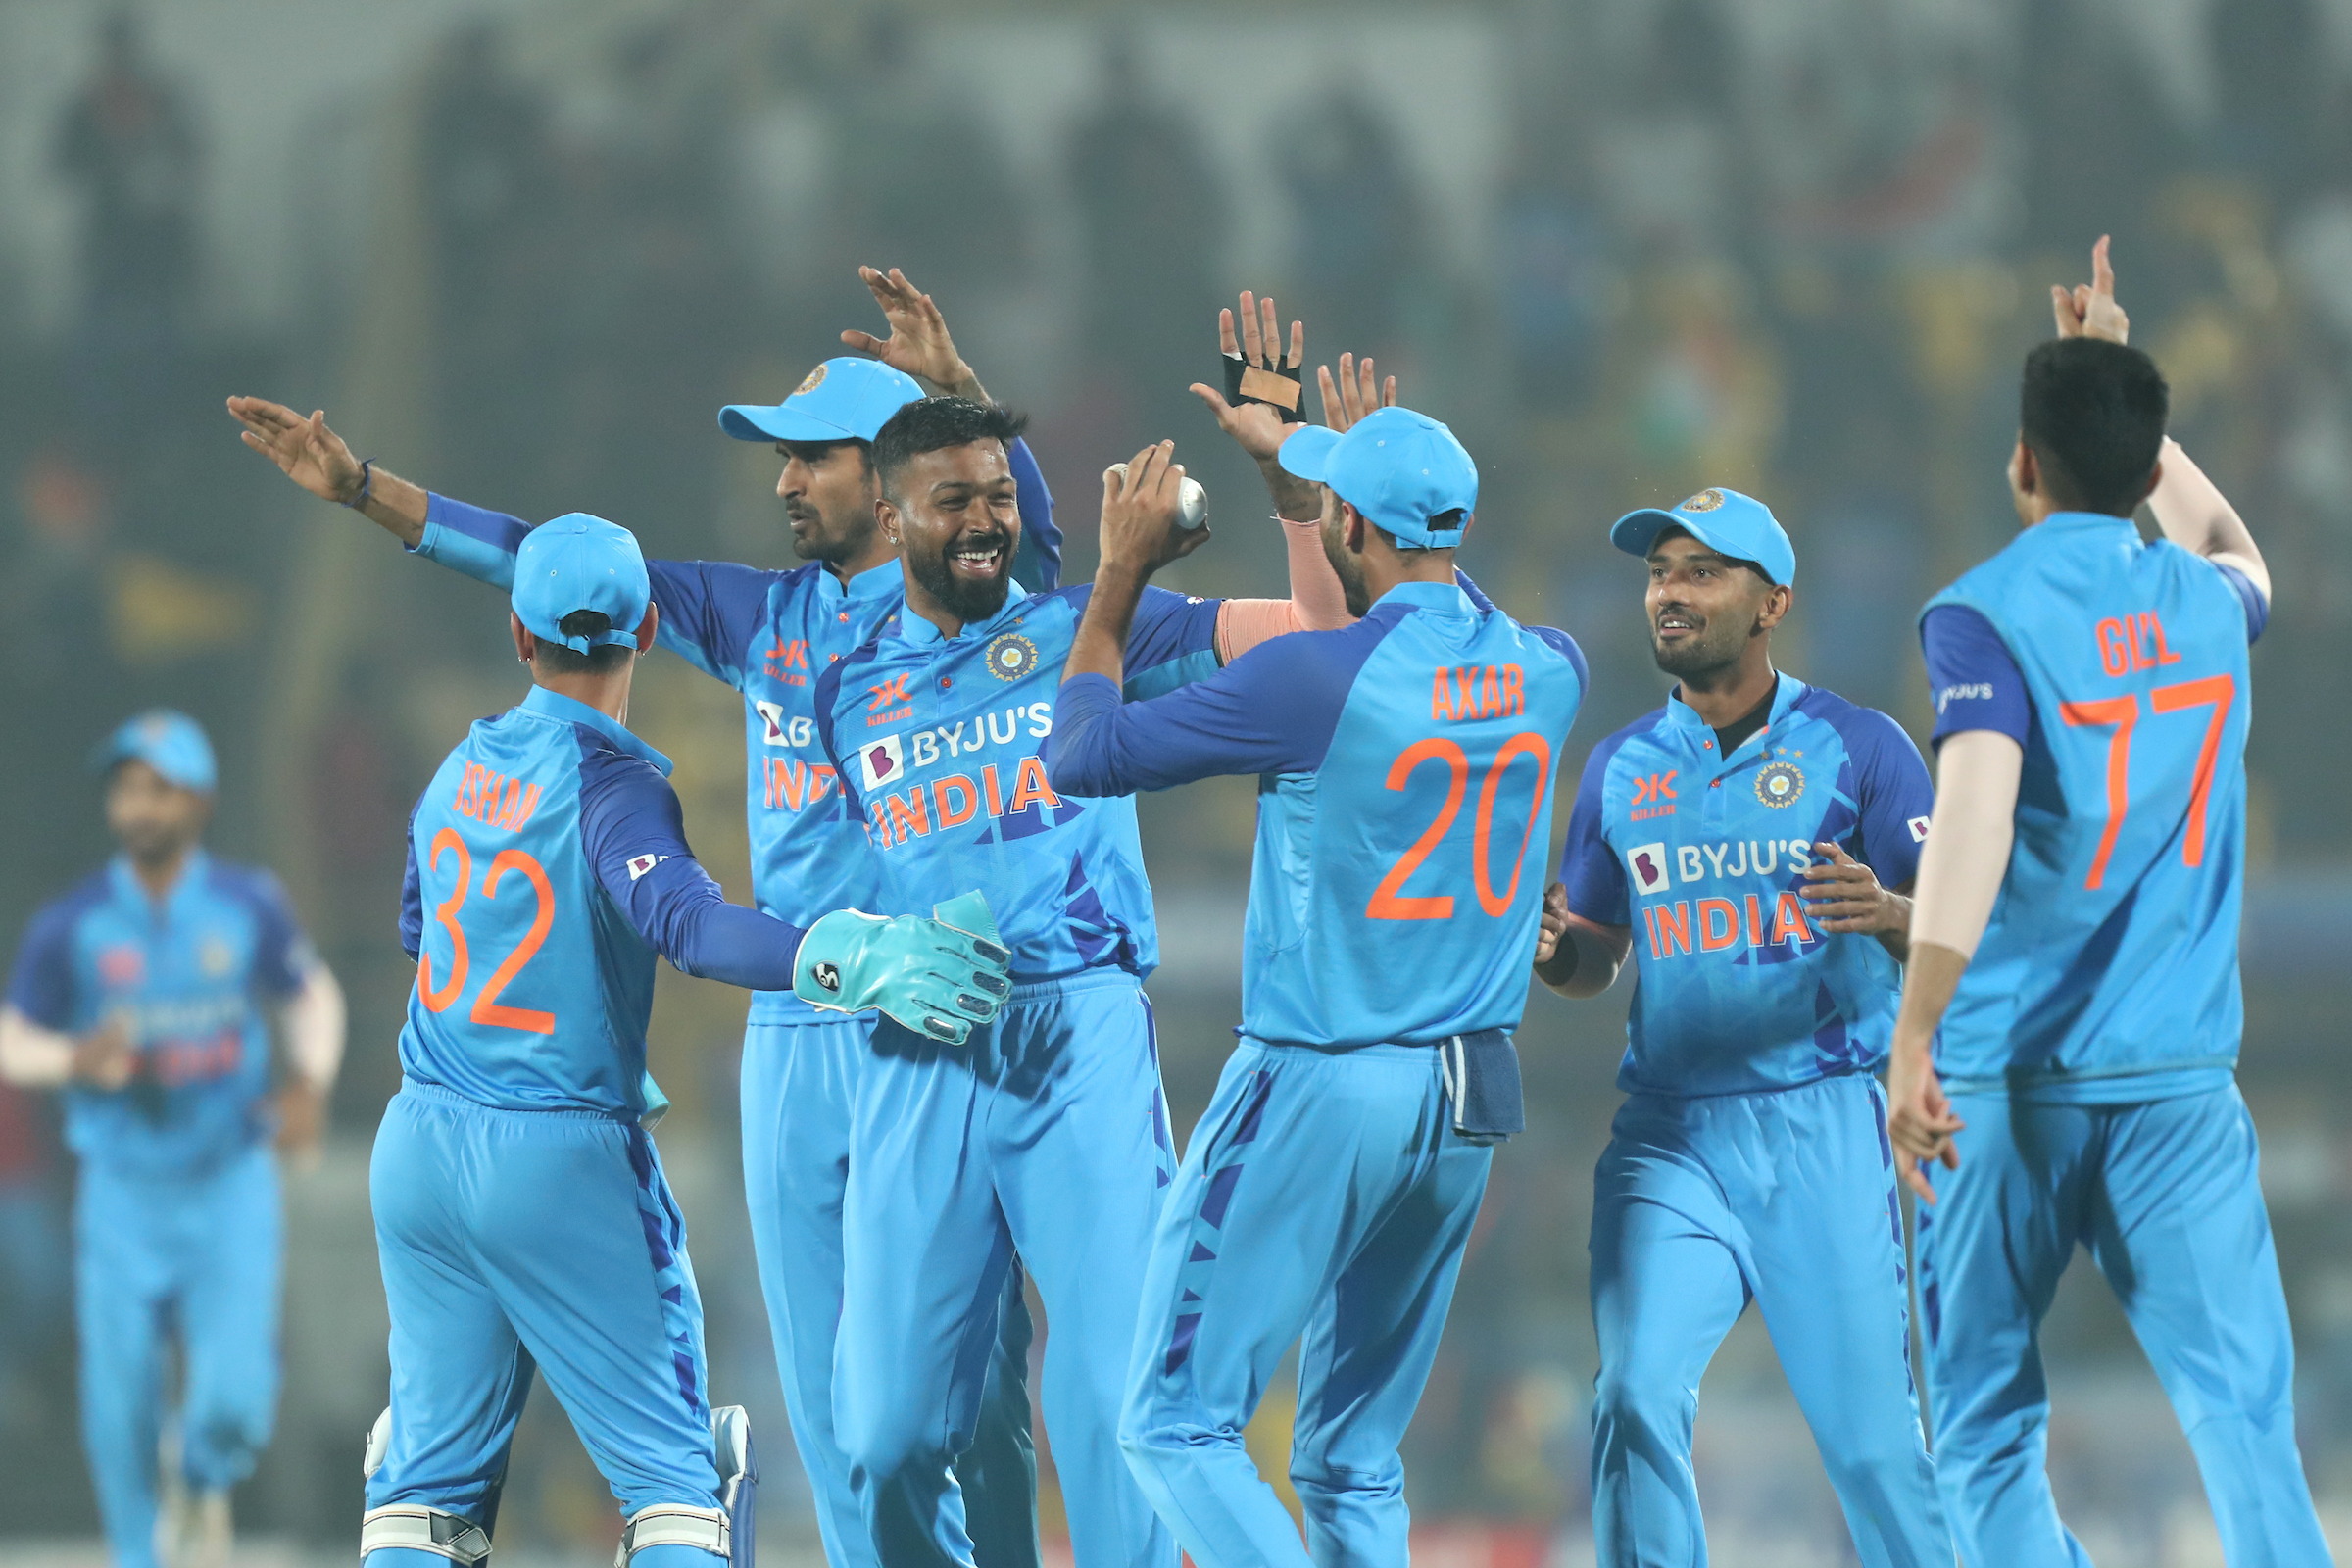 IND vs SL Suryakumar hit a blistering century India beat Sri Lanka by 91 runs to win the seri